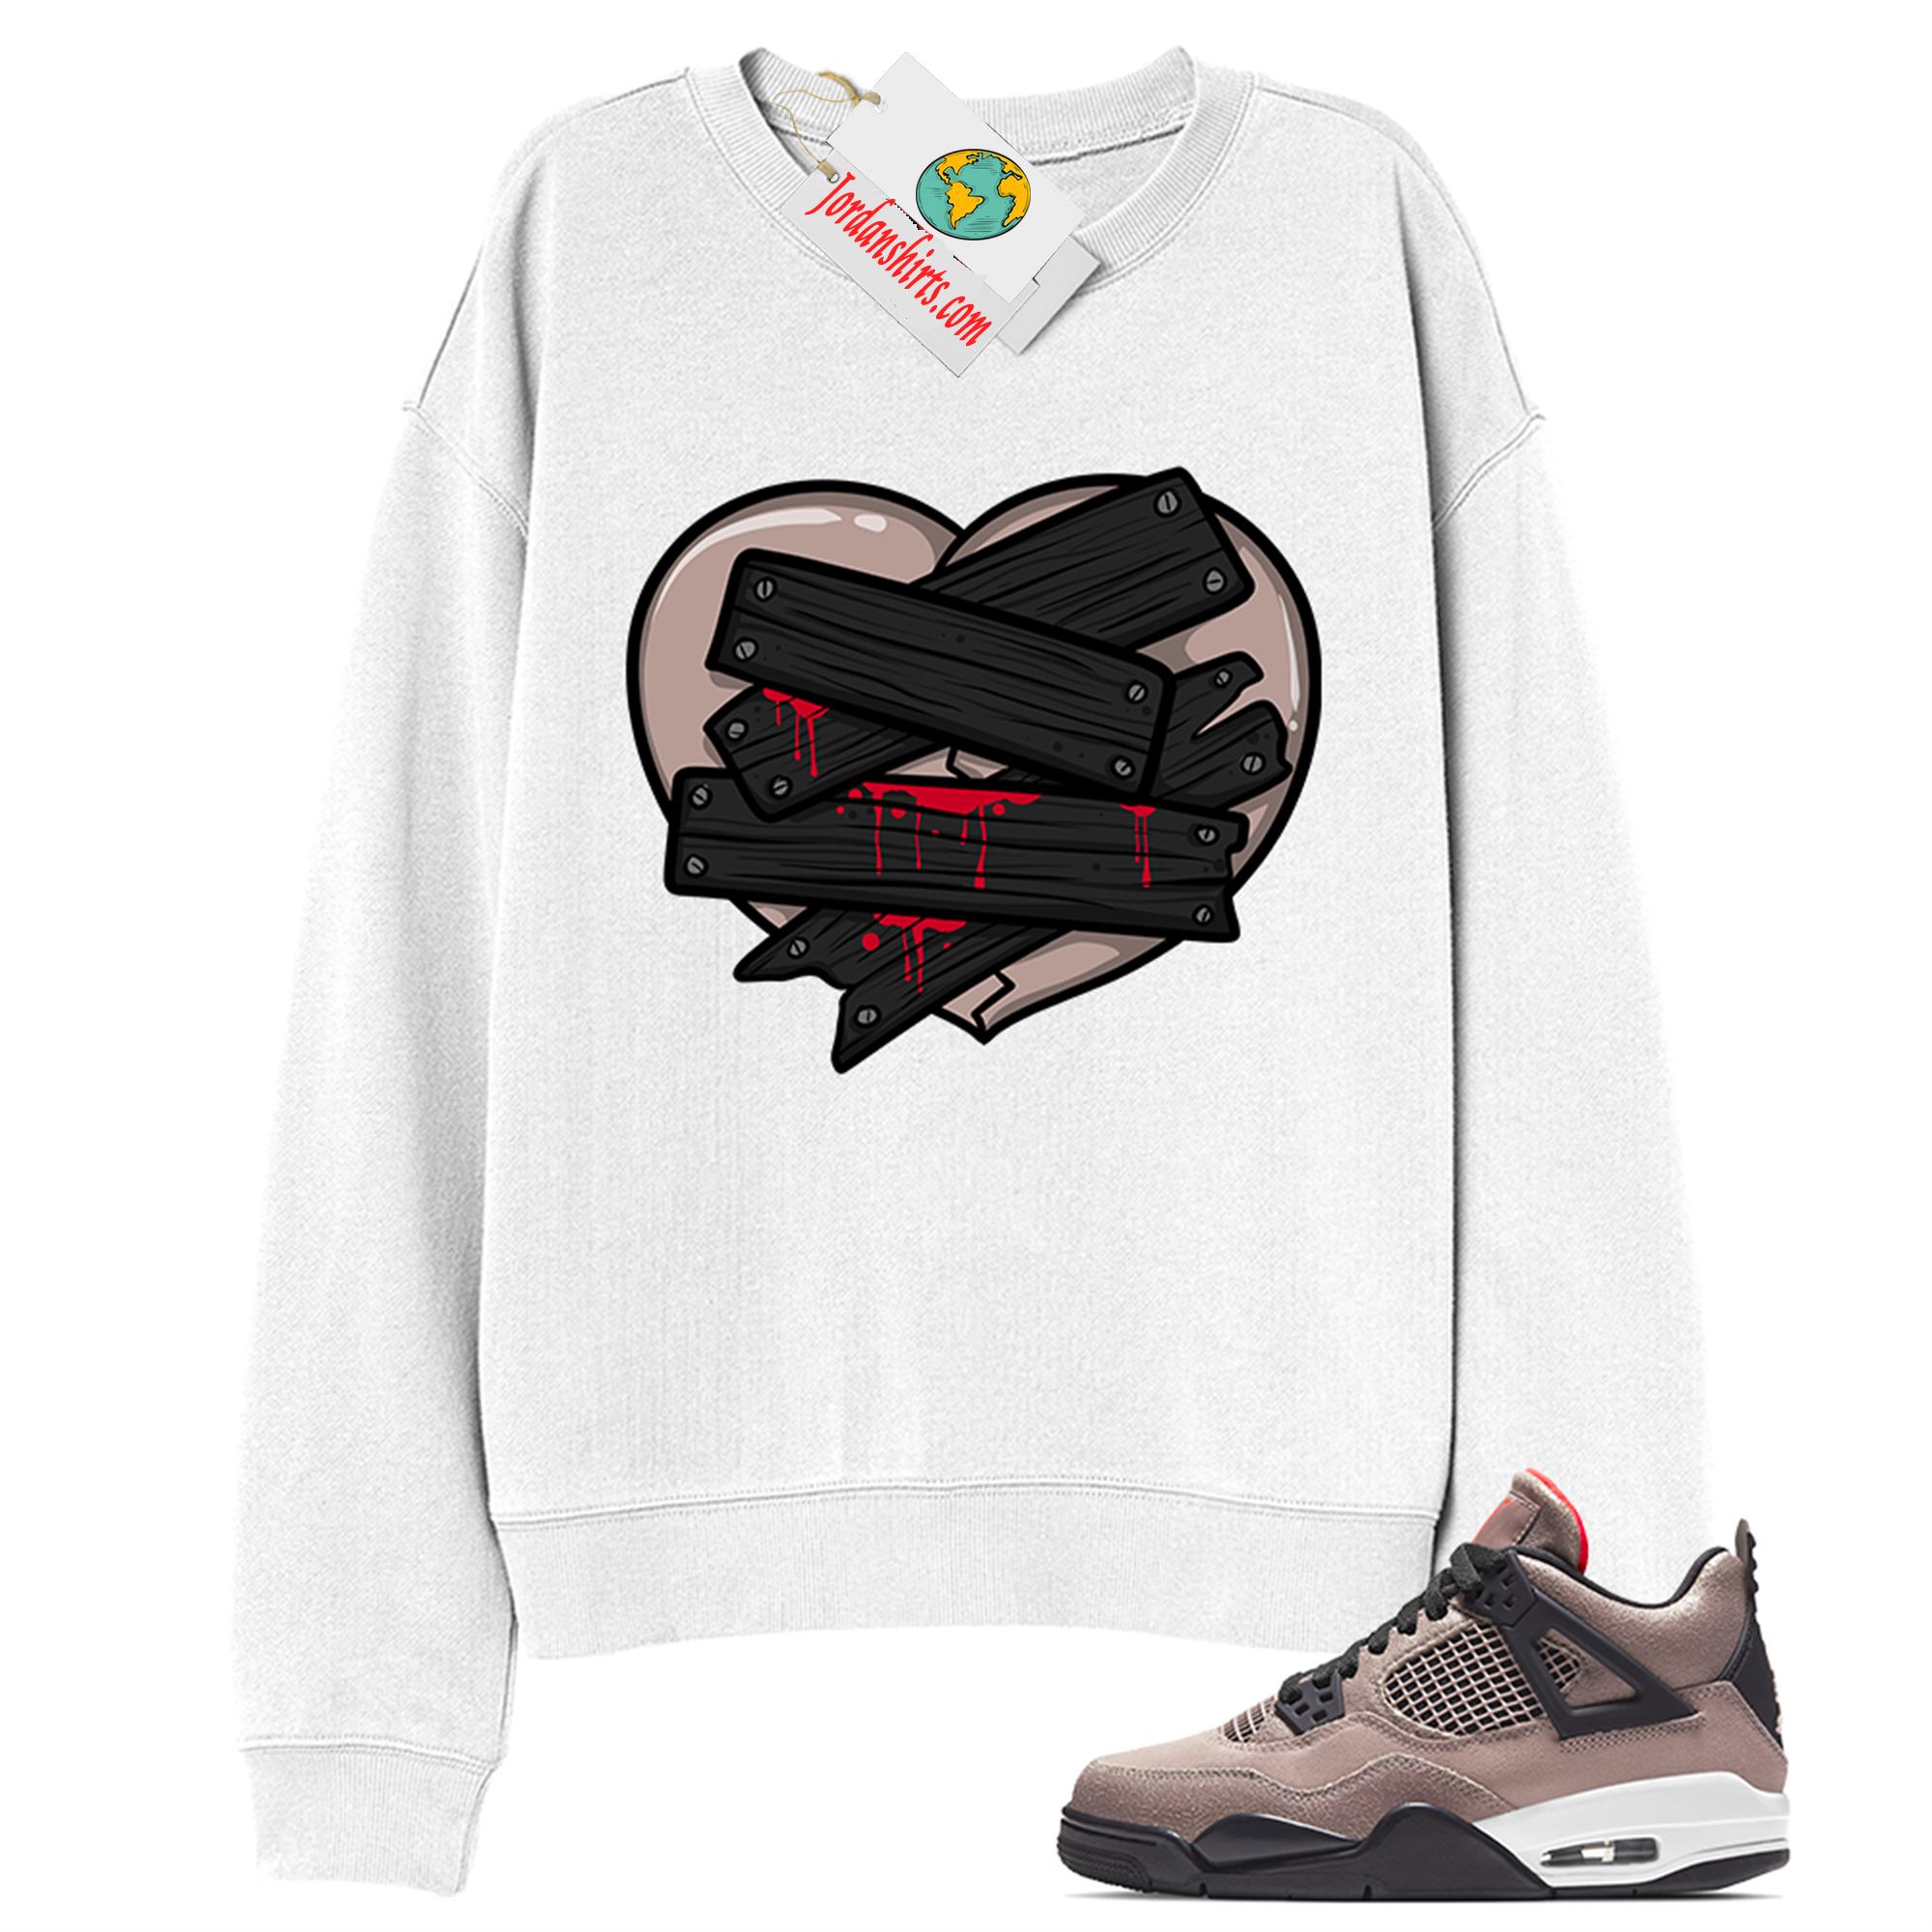 Jordan 4 Sweatshirt, Patch Love Broken Heart White Sweatshirt Air Jordan 4 Taupe Haze 4s Full Size Up To 5xl